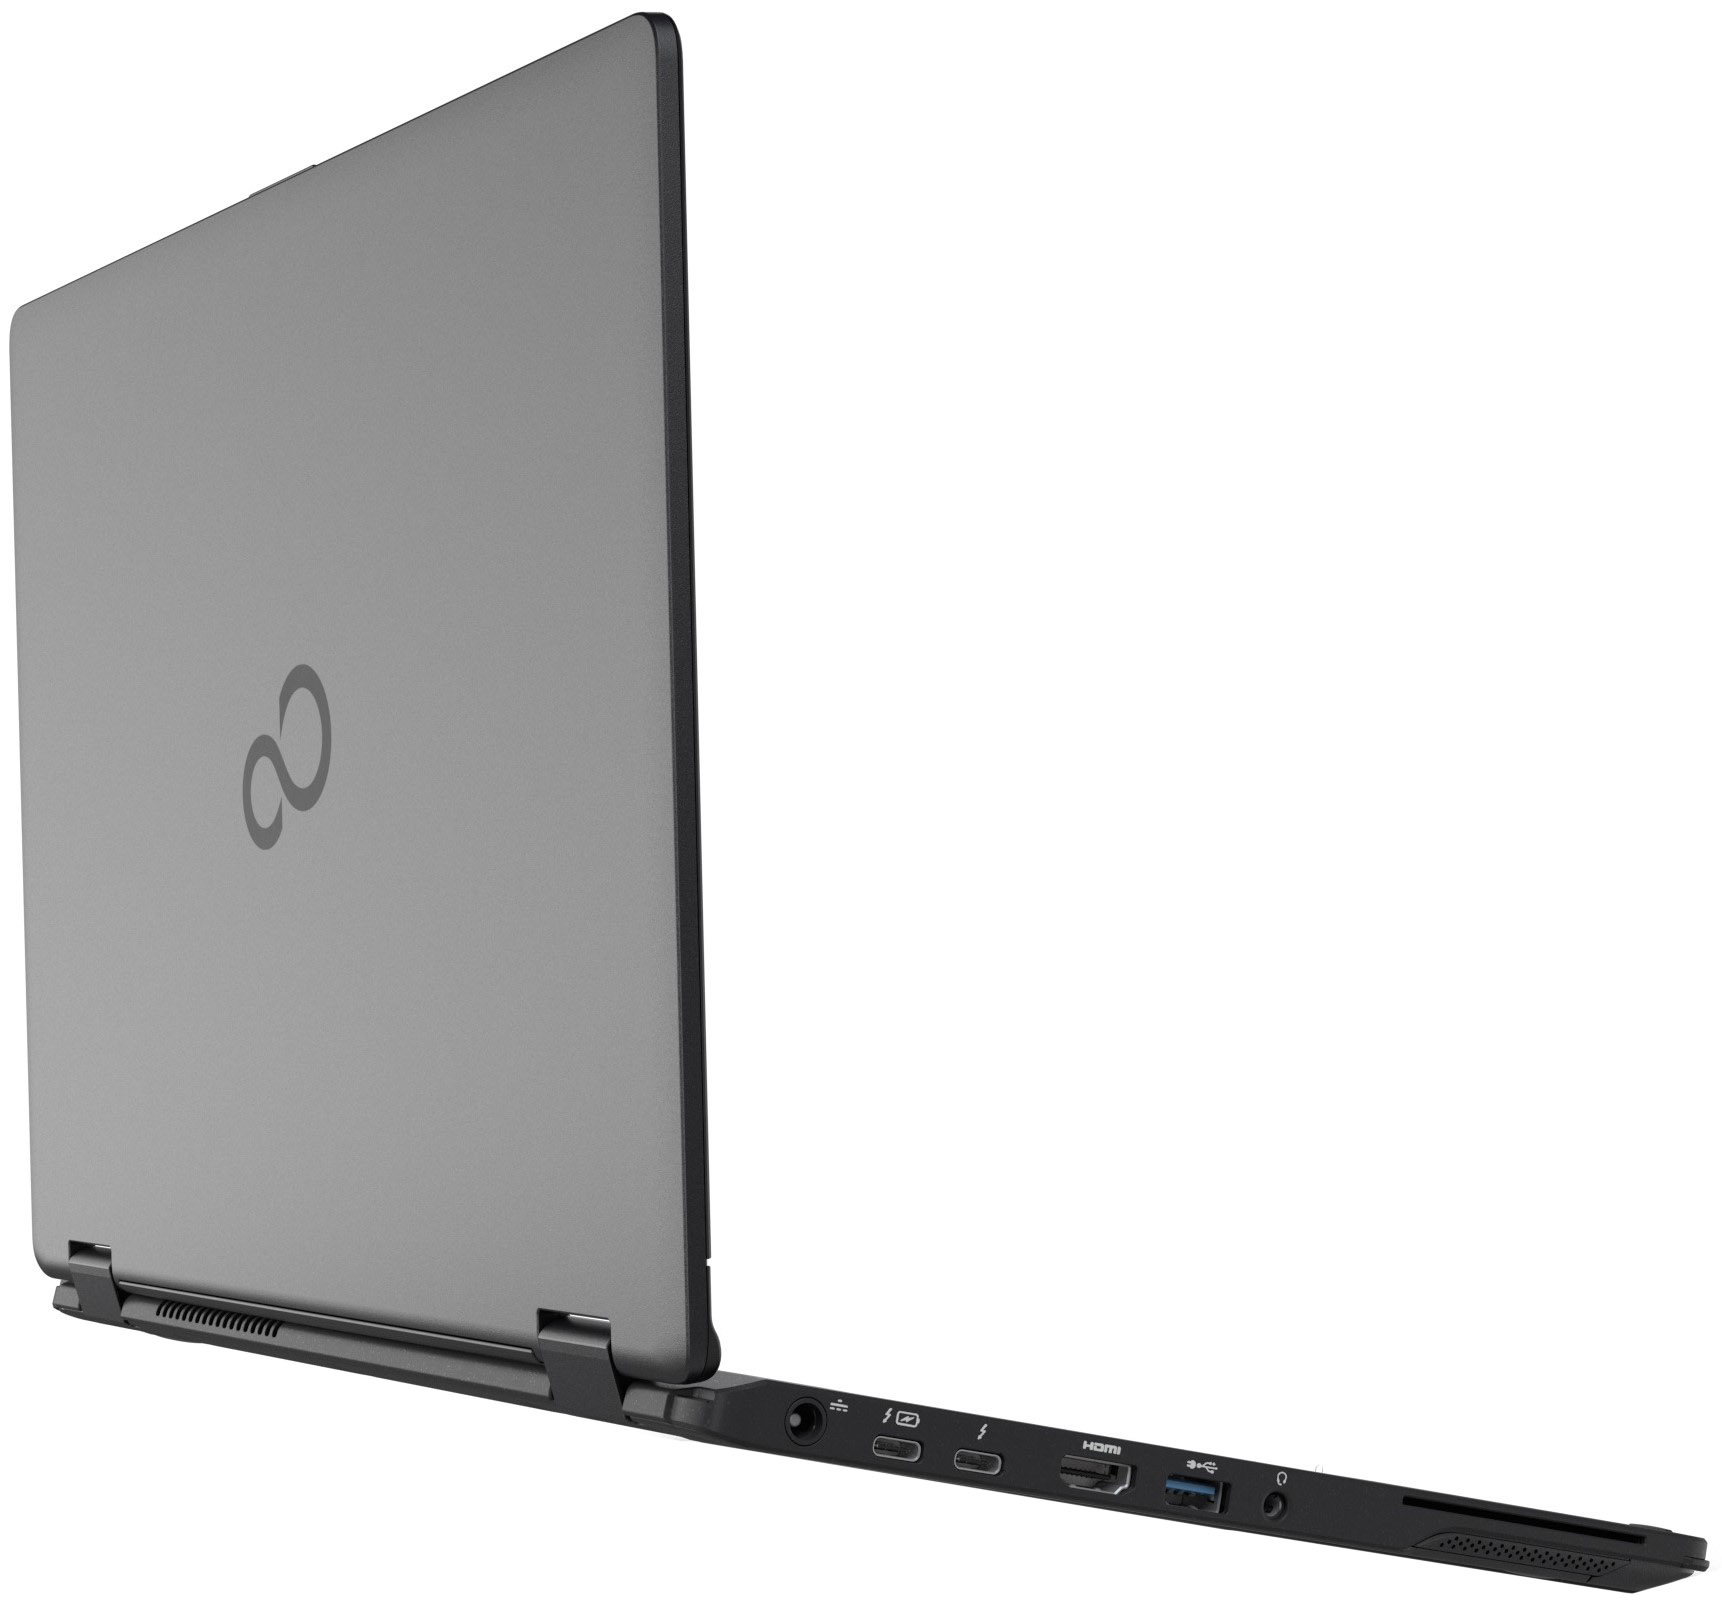 Fujitsu LifeBook U9311 - Specs, Tests, and Prices